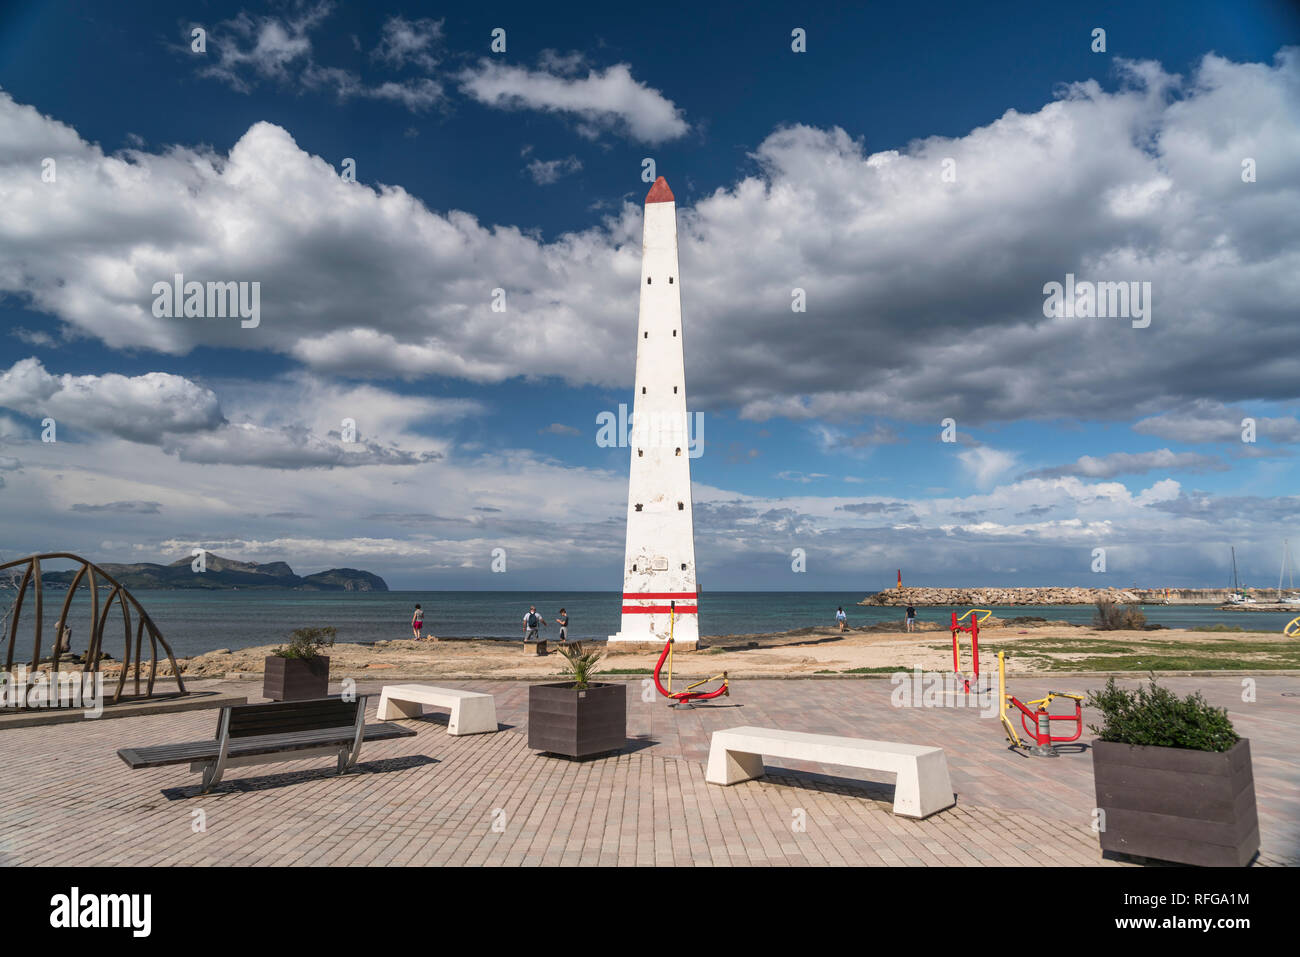 Obelisco an der Uferpromenade, Can Picafort, Maiorca, Balearen, Spanien | obelsik presso la passeggiata sulla spiaggia, Can Picafort, Maiorca, isole Baleari, Foto Stock